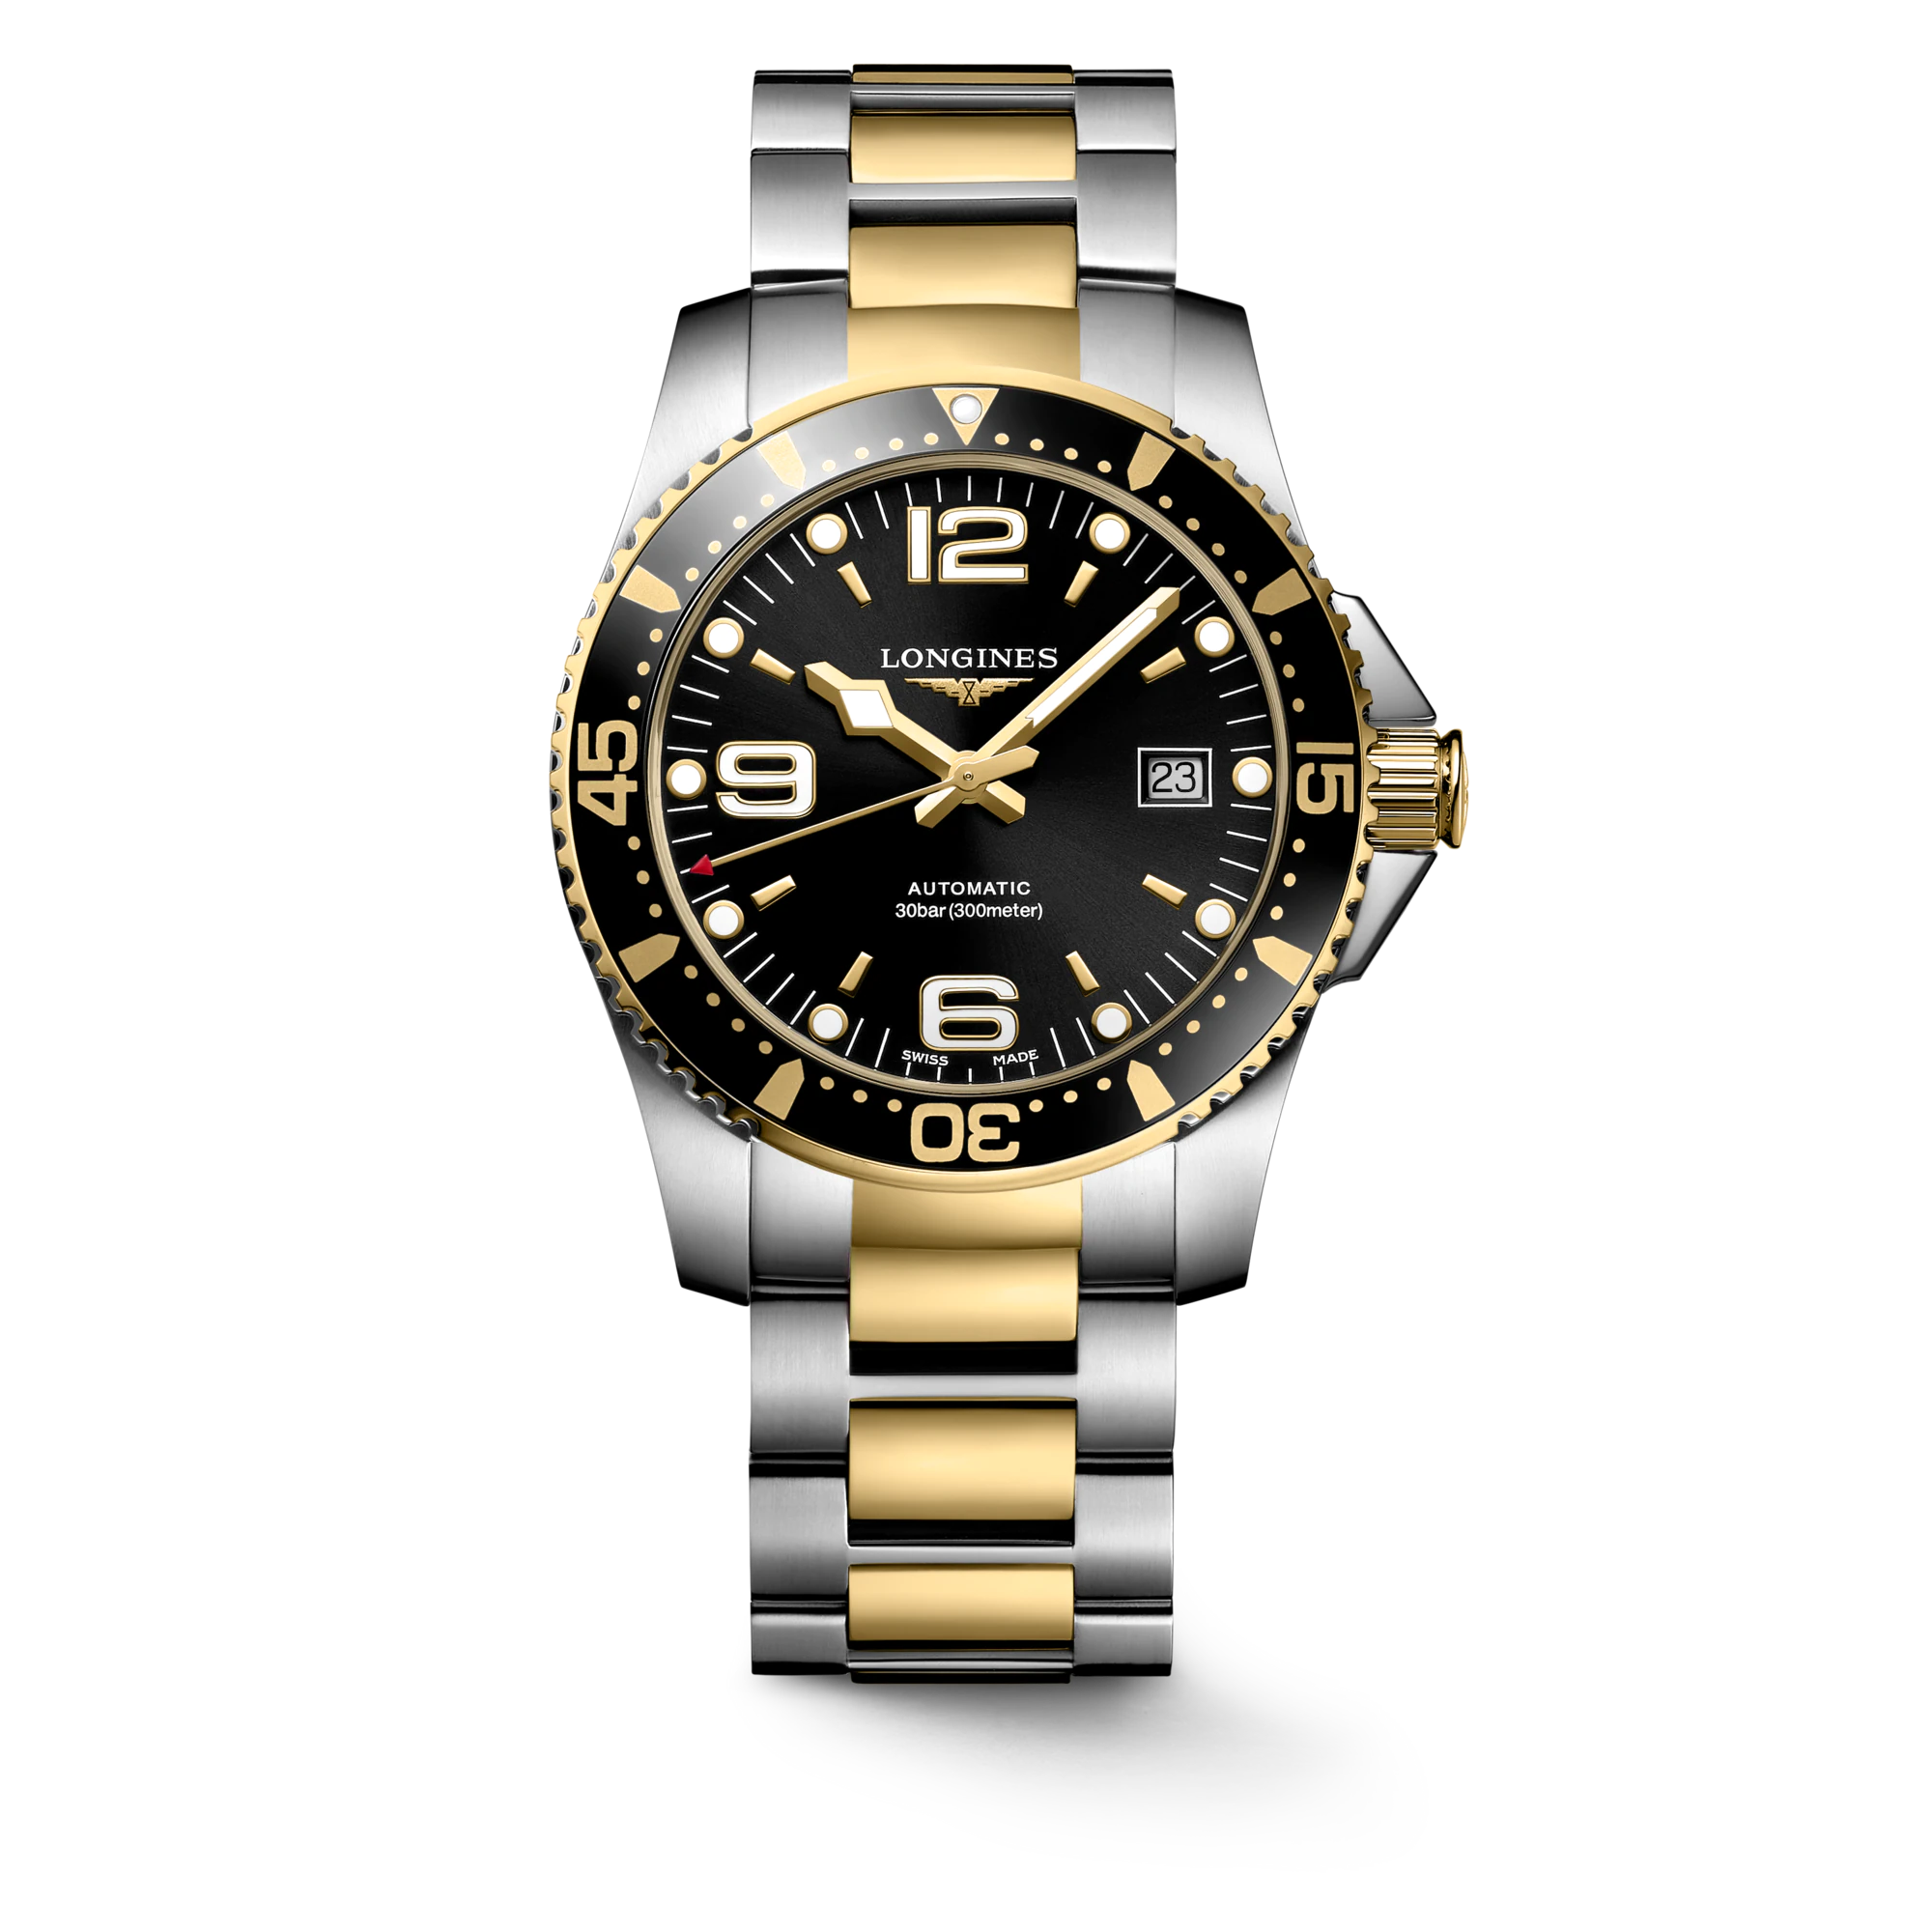 Longines Hydroconquest Automatic Men's Watch L37423567